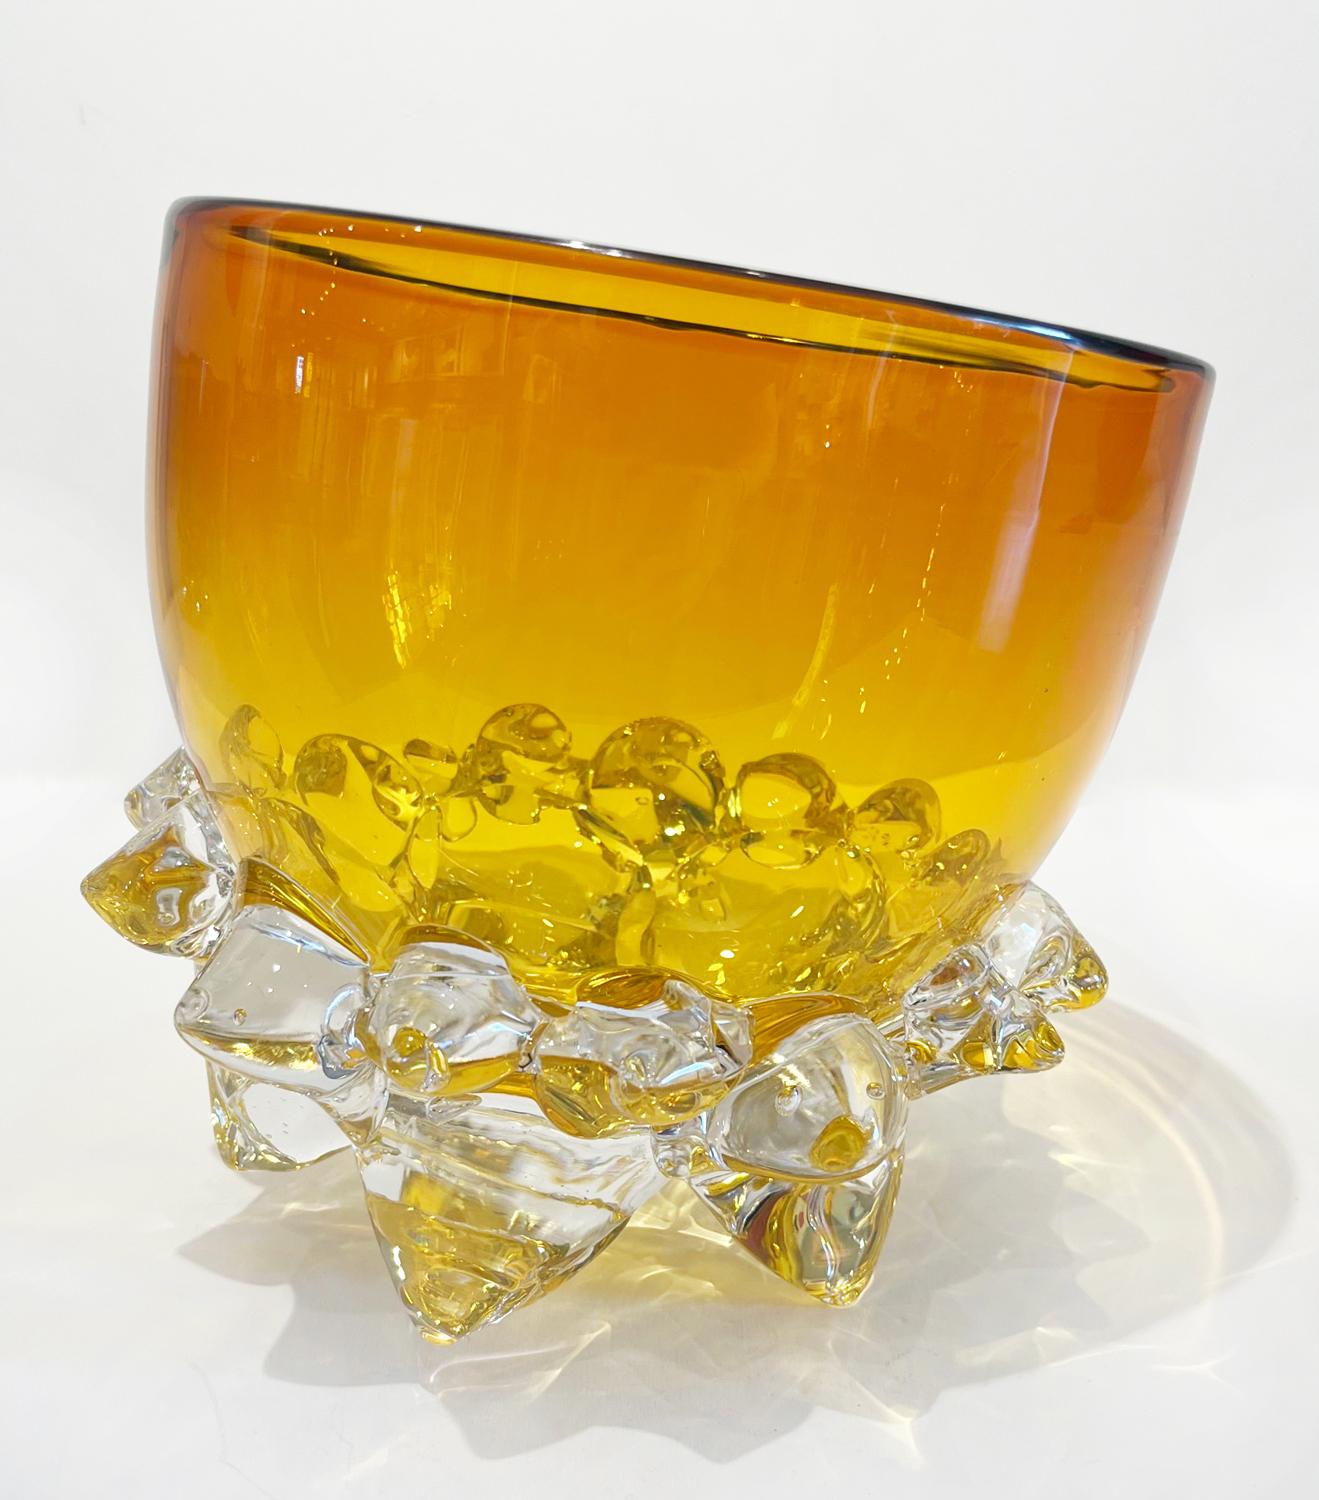 7" Glass Thorn Vessel, Gold topaz, art glass bowl - Art by Andrew Madvin